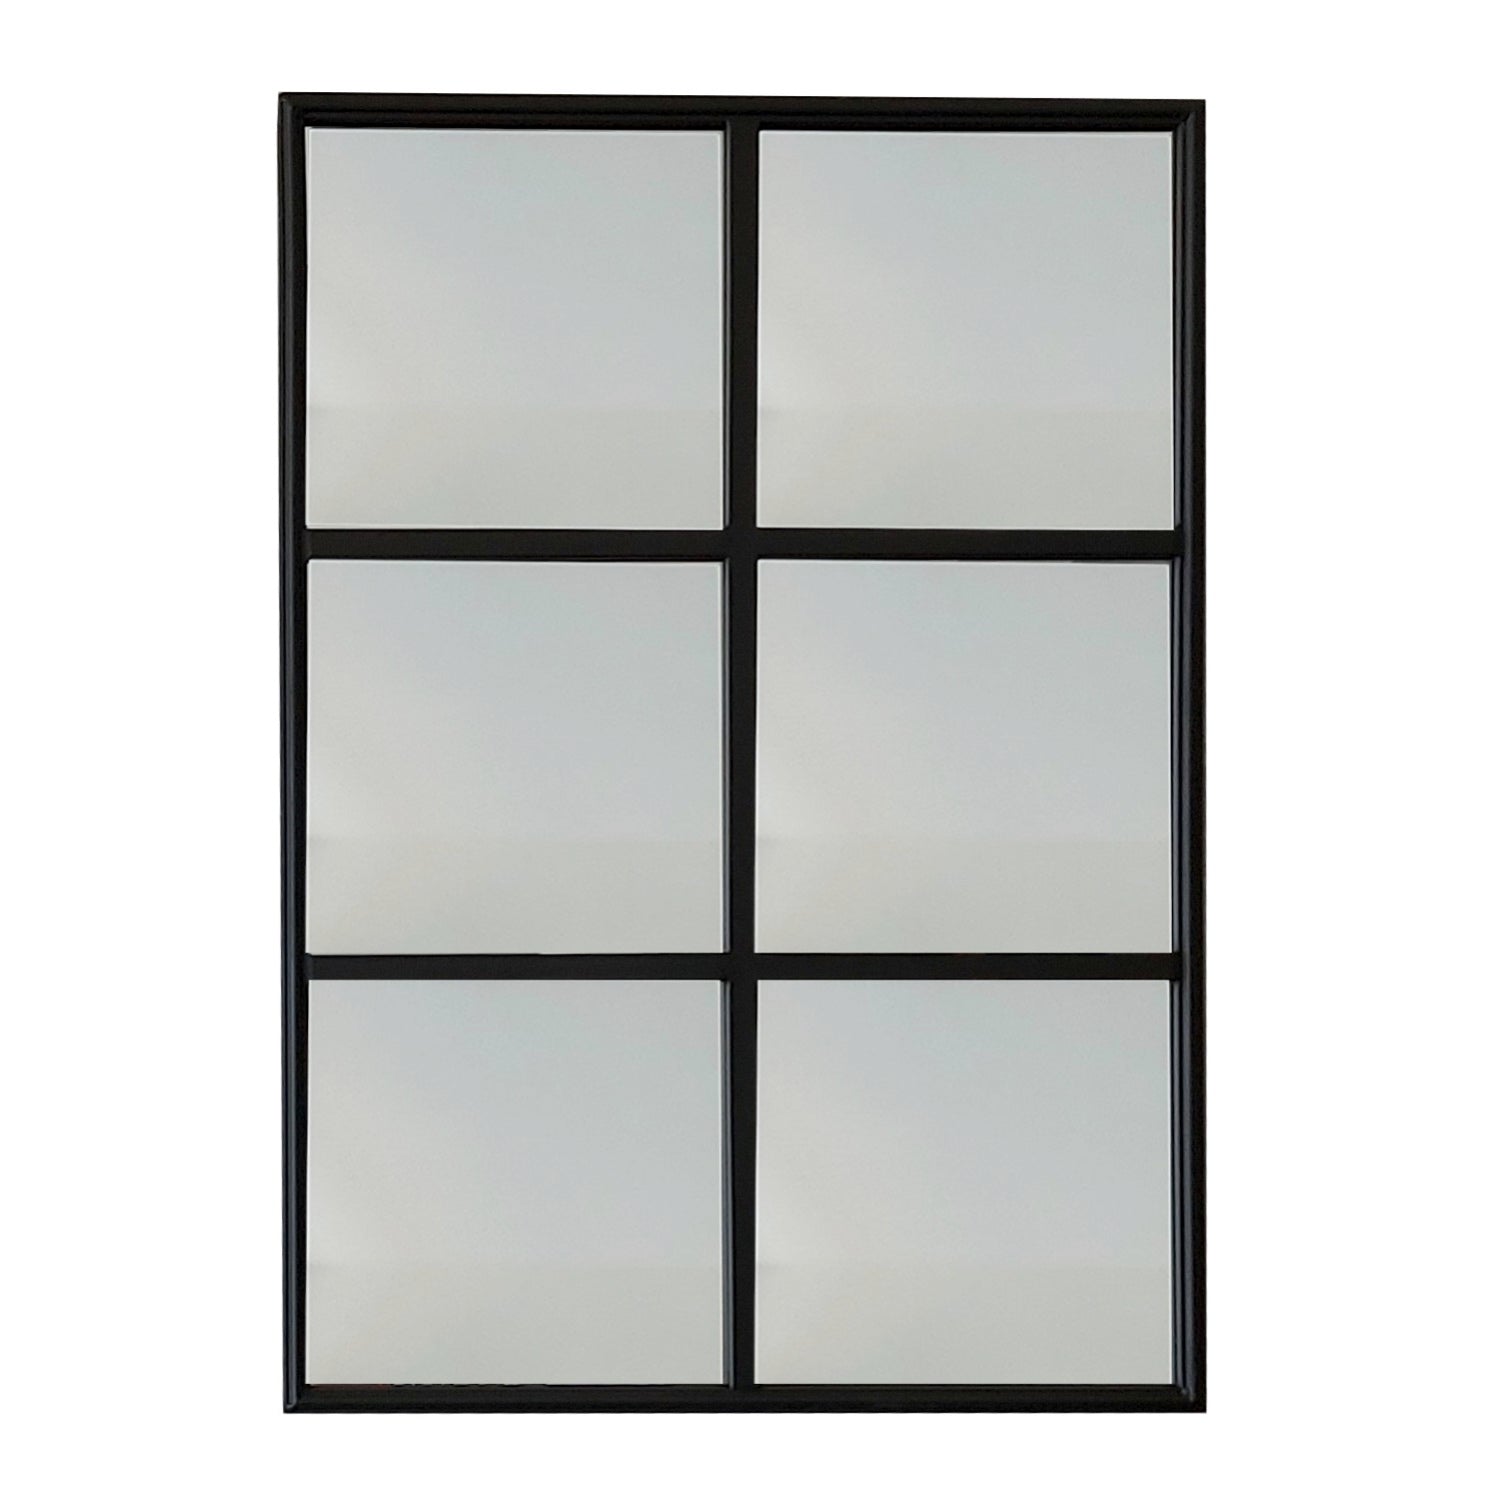 Espejo ventana palillo 62 x 92 cms